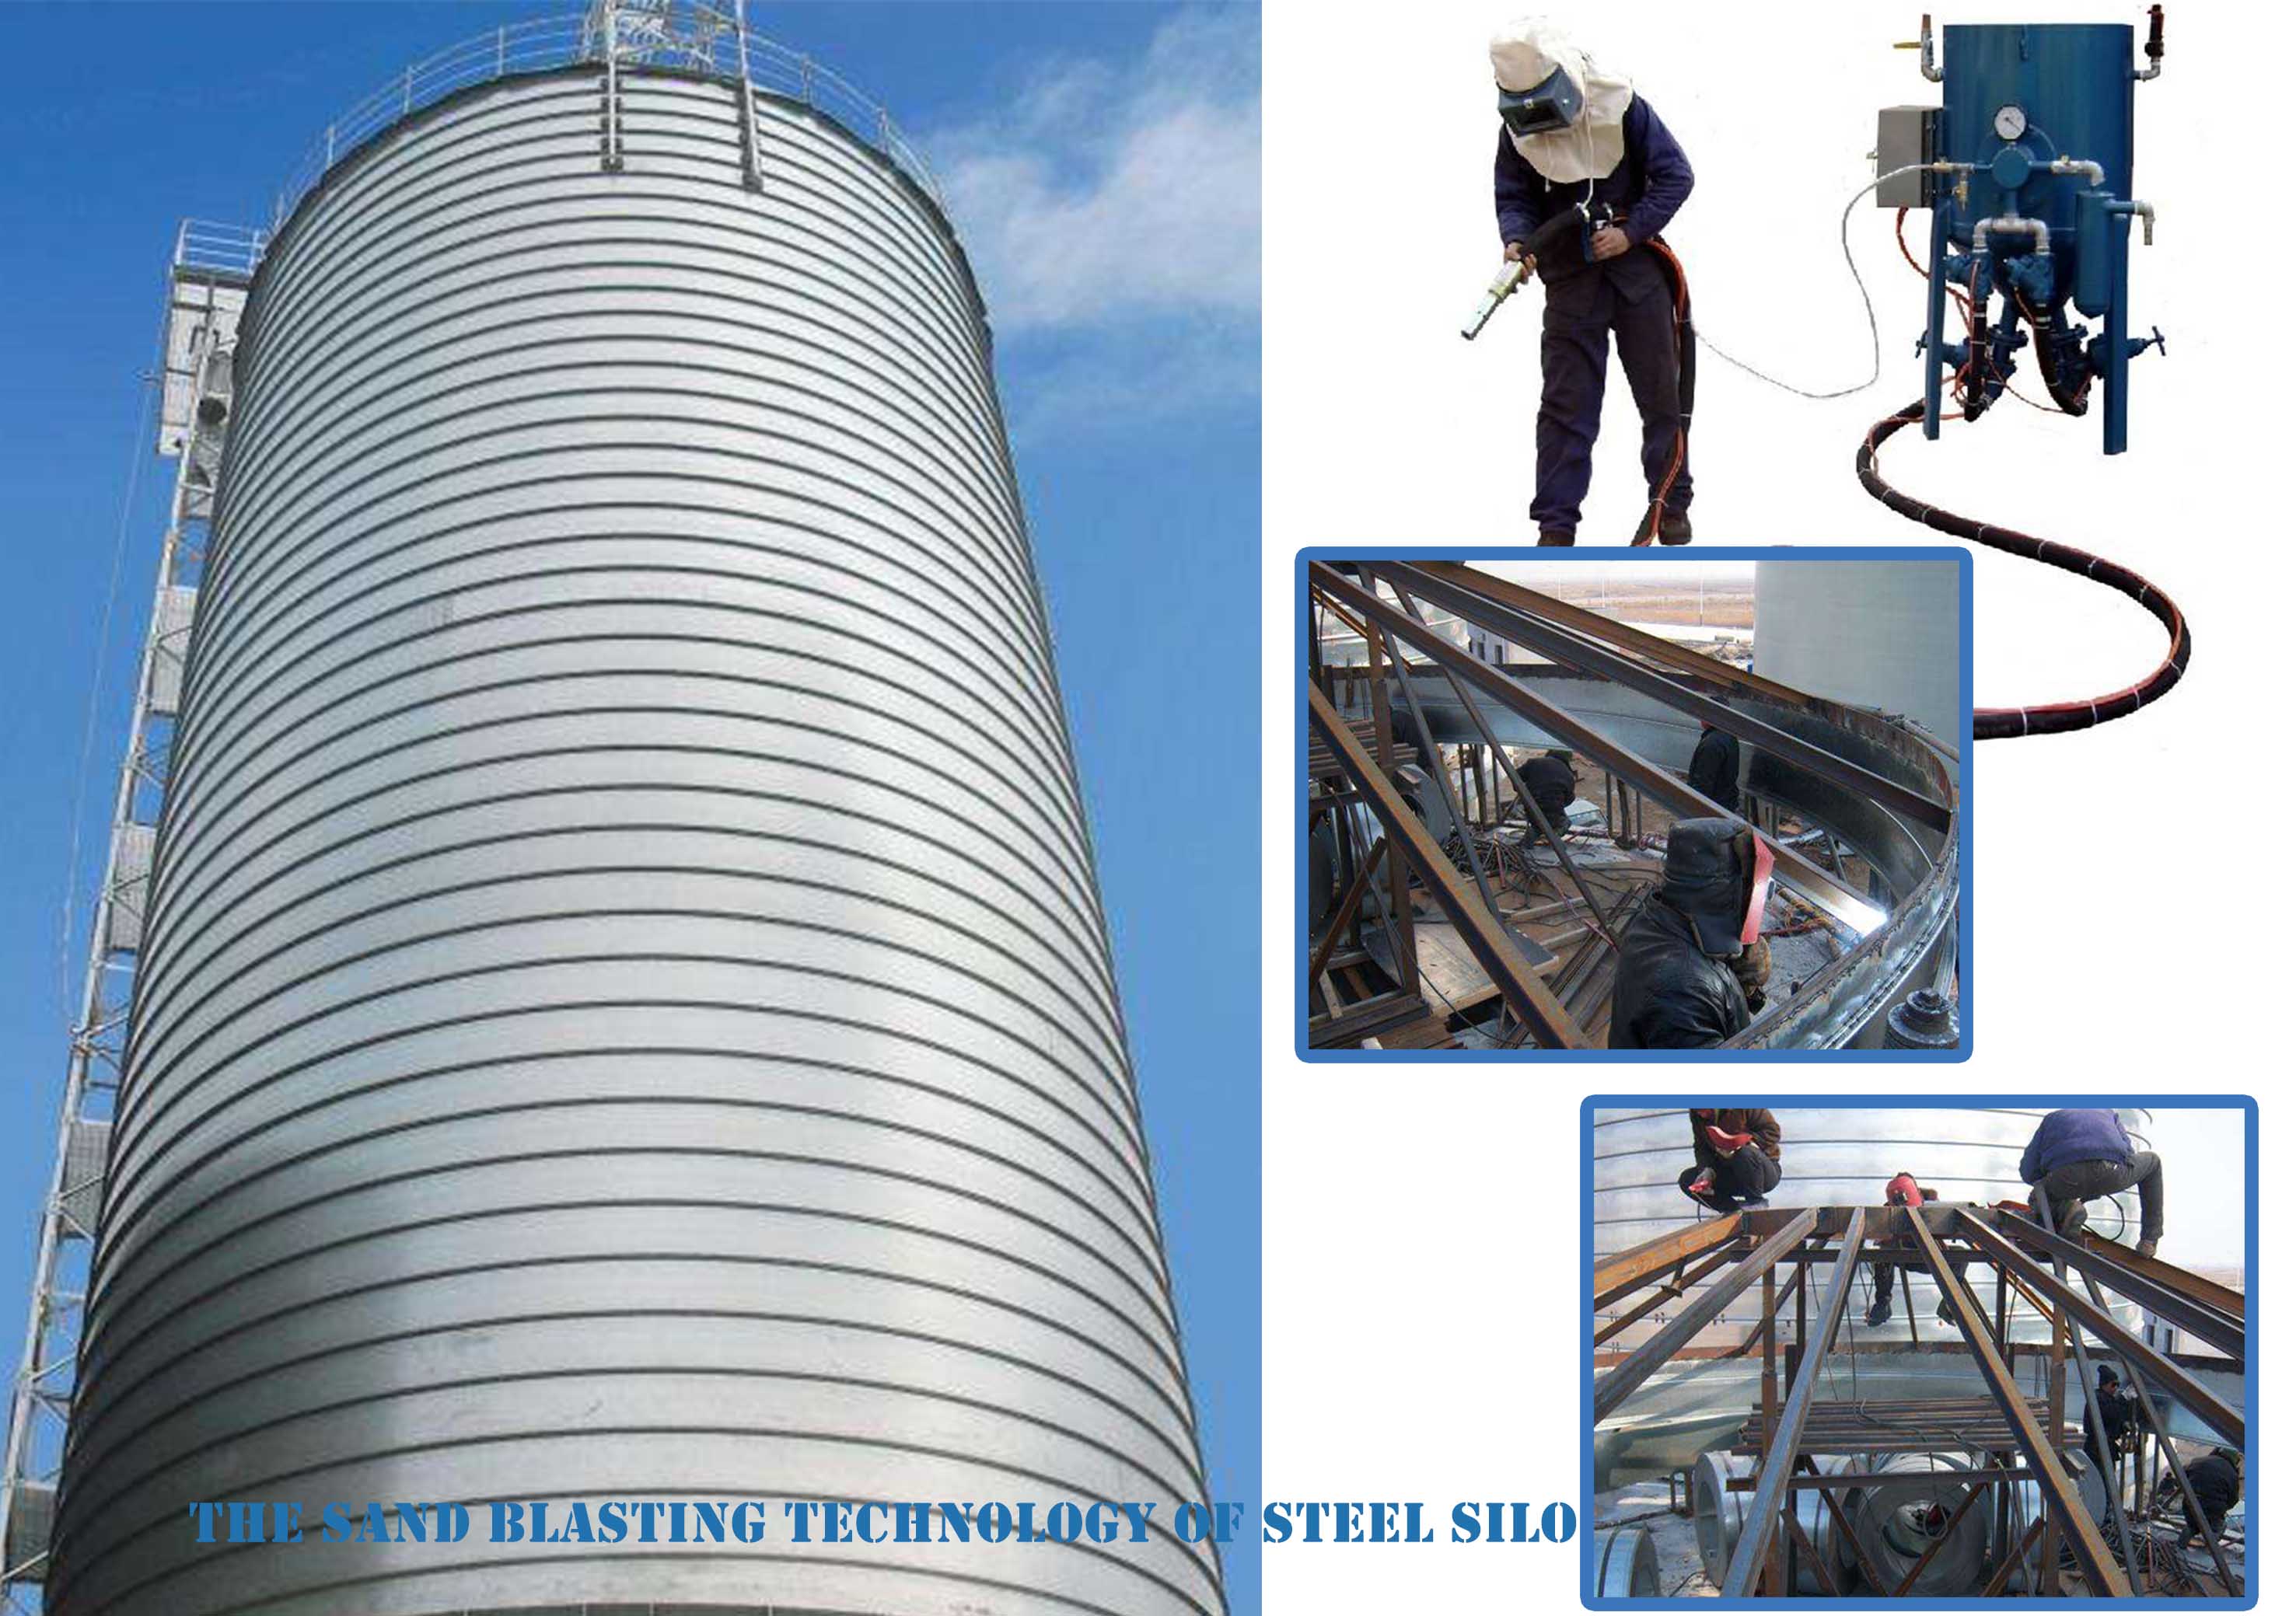 the sandblasting technology of steel silo